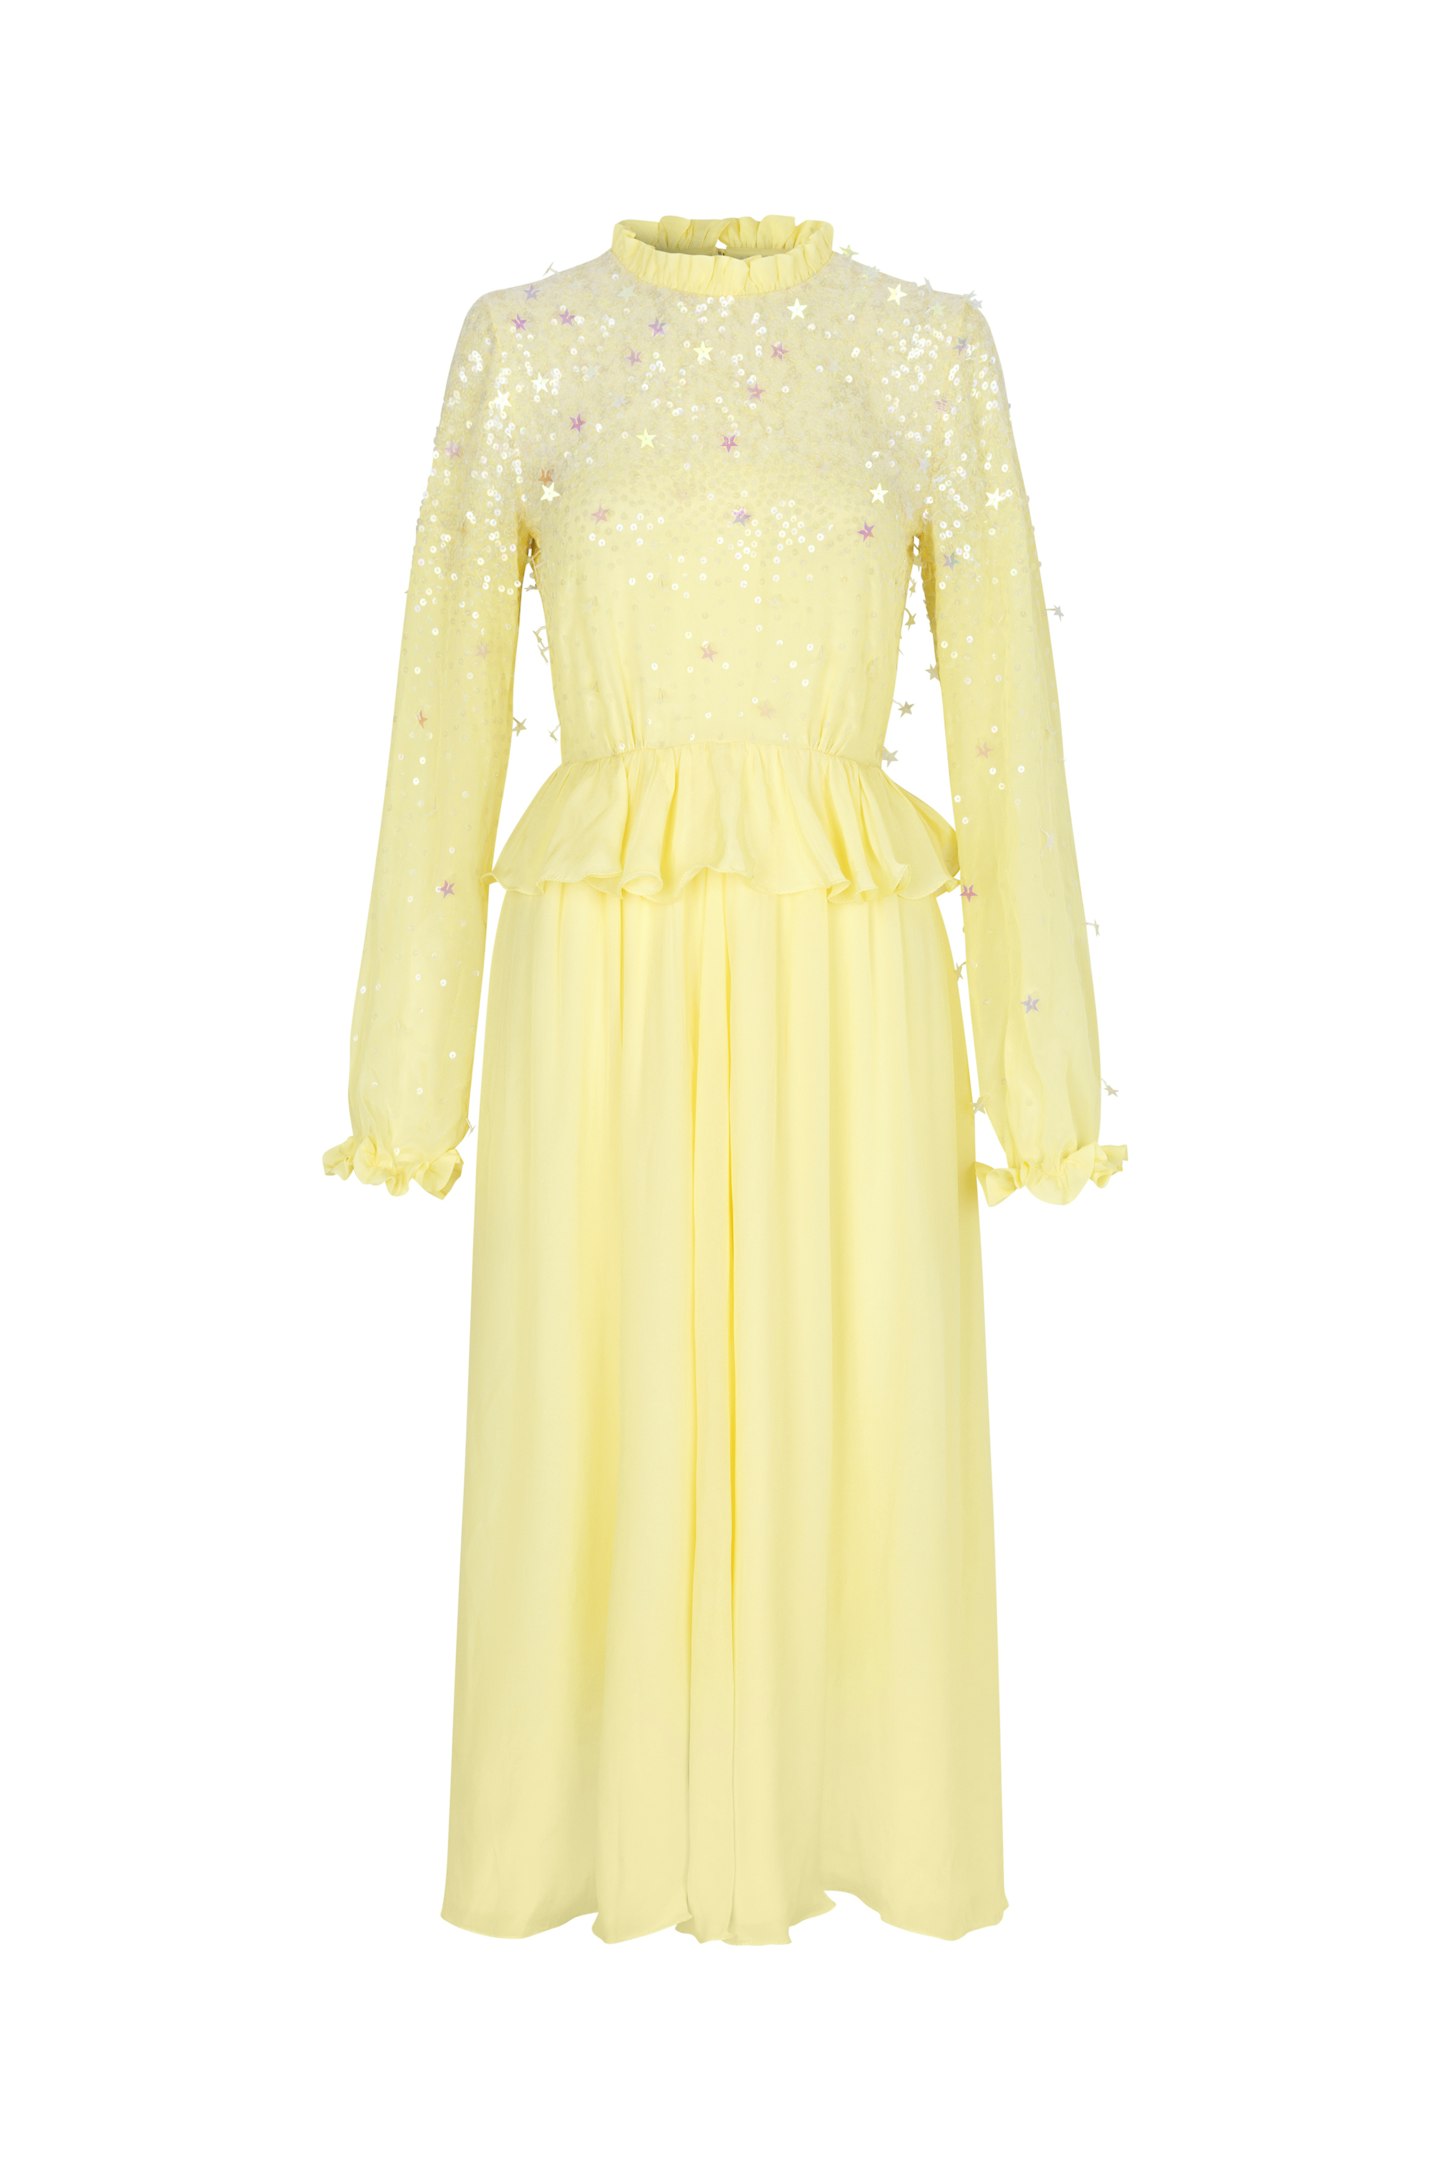 Stine Goya, Gala Ruffled Sequin-Embellished Chiffon Mini Dress, £1470, Net-A-Porter